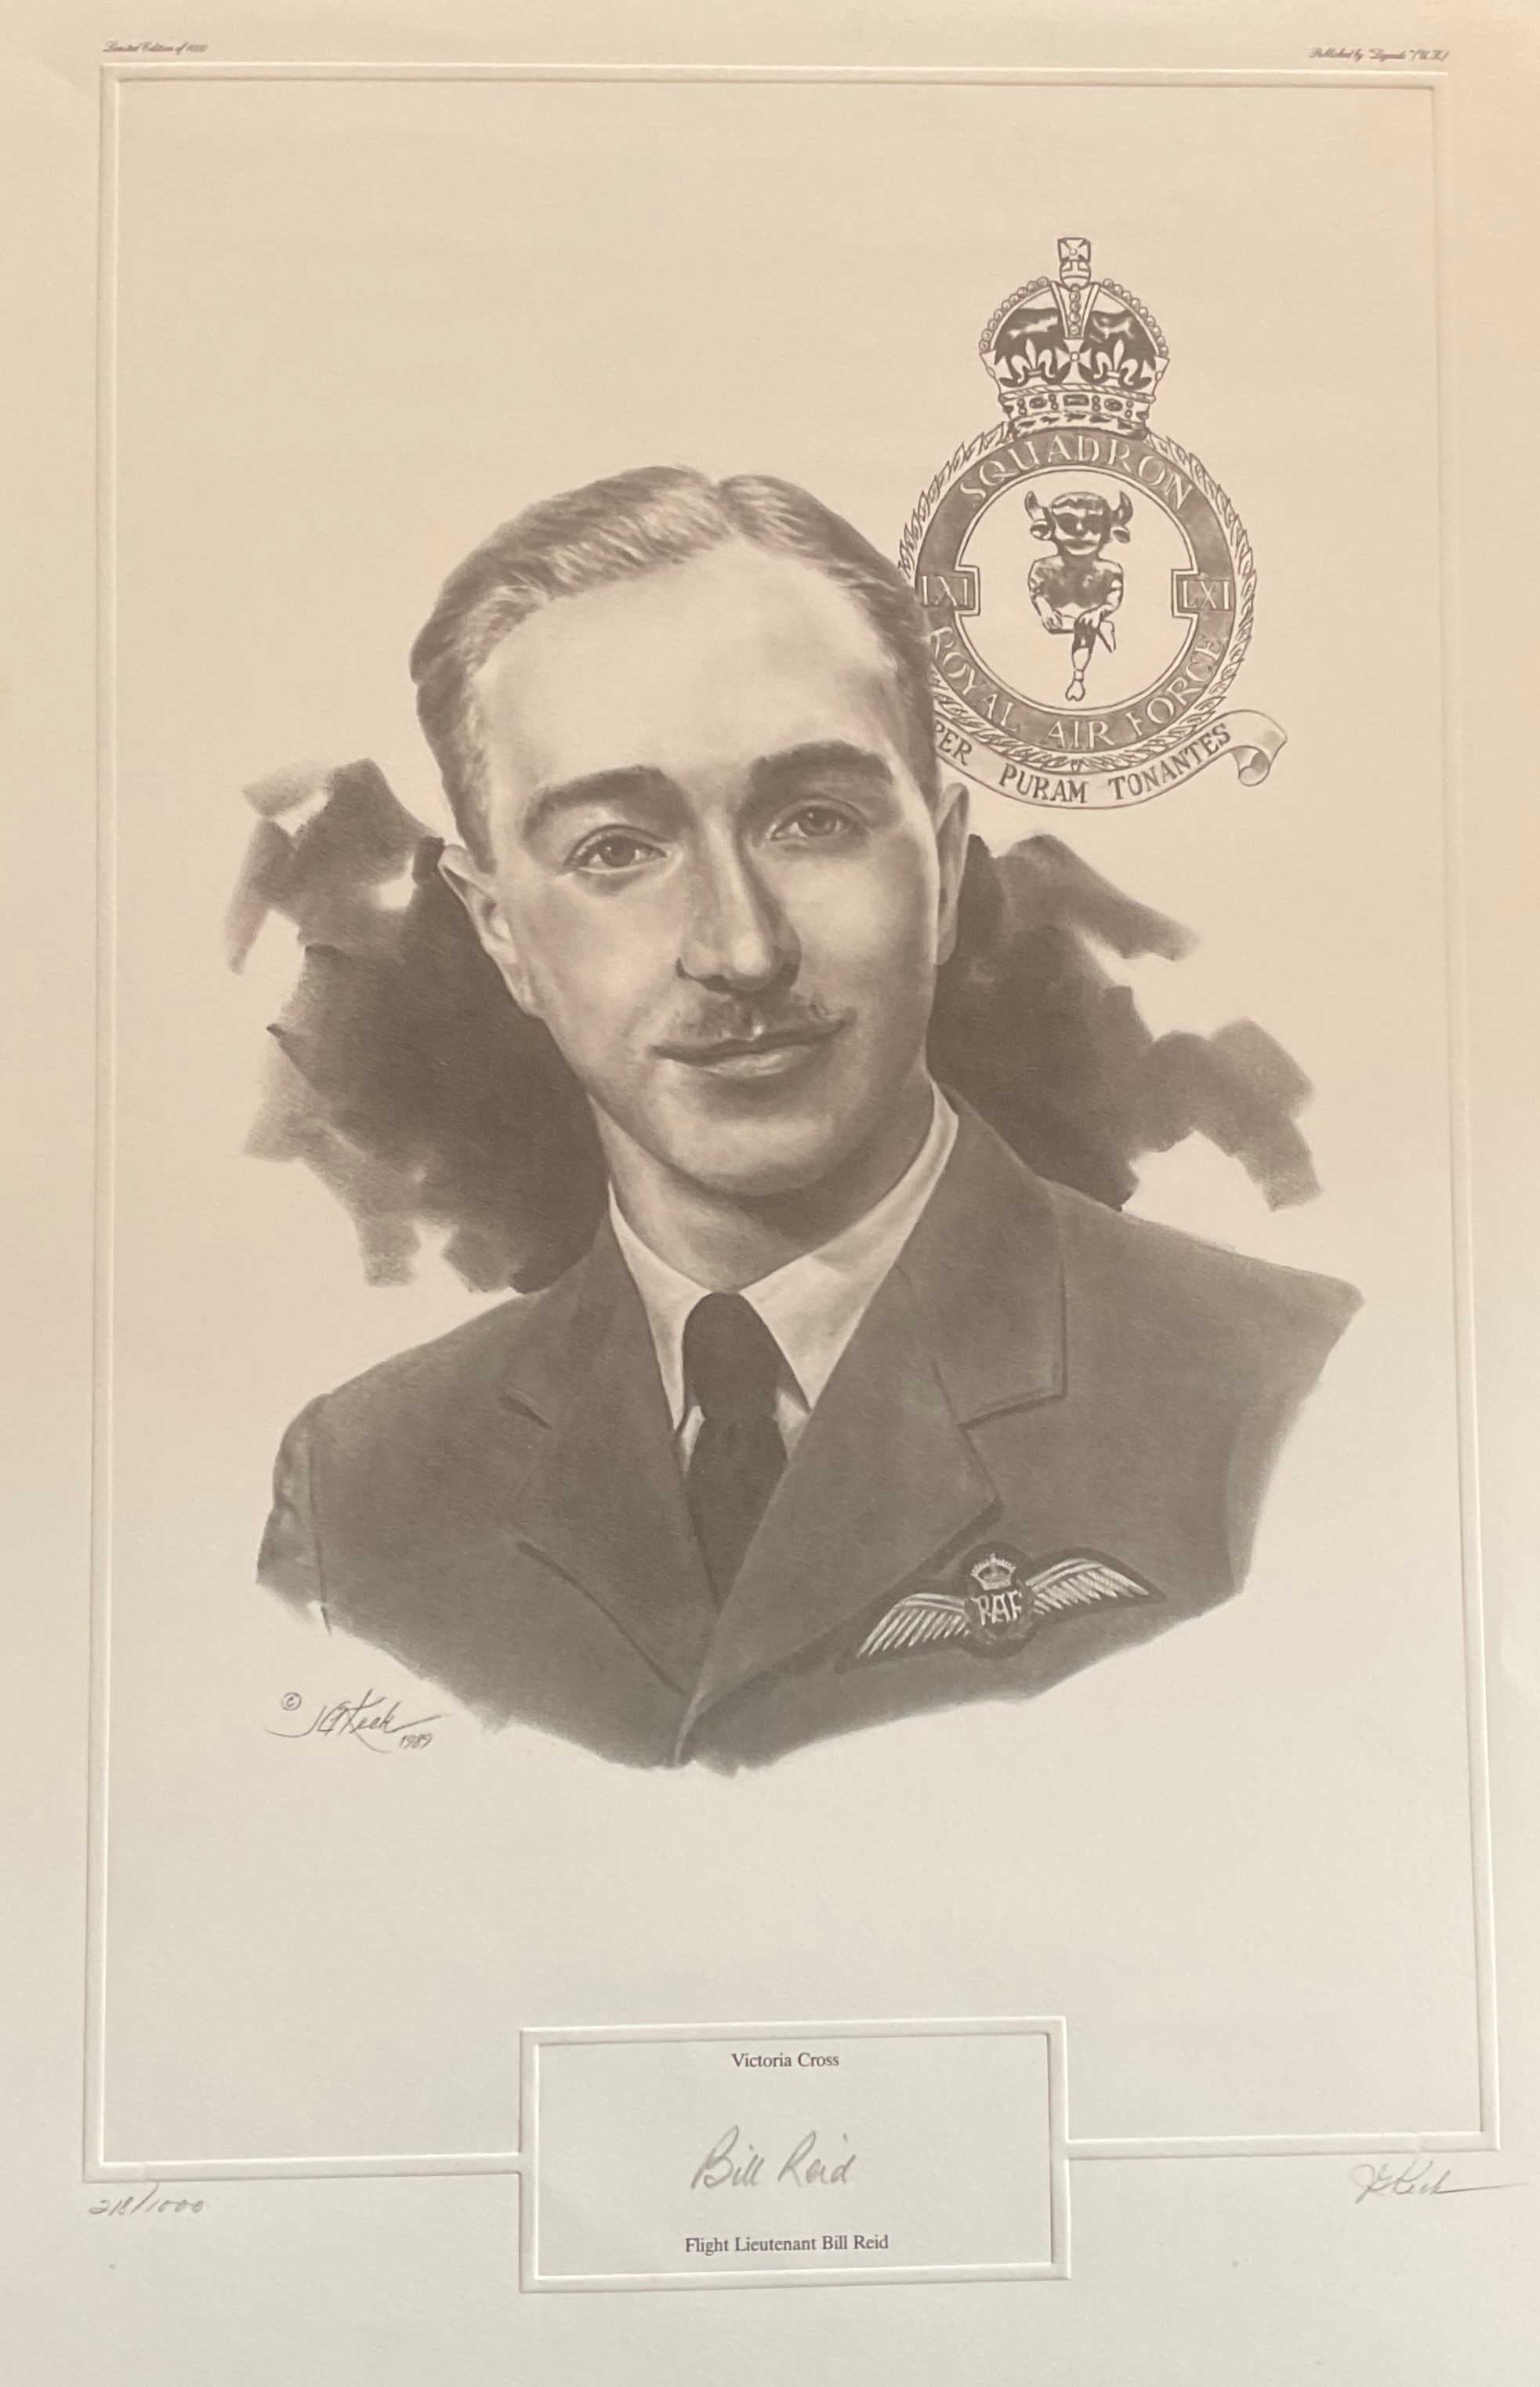 World War II Flight Lieutenant Bill Reid VC signed 24x16 pencil drawing limited edition also